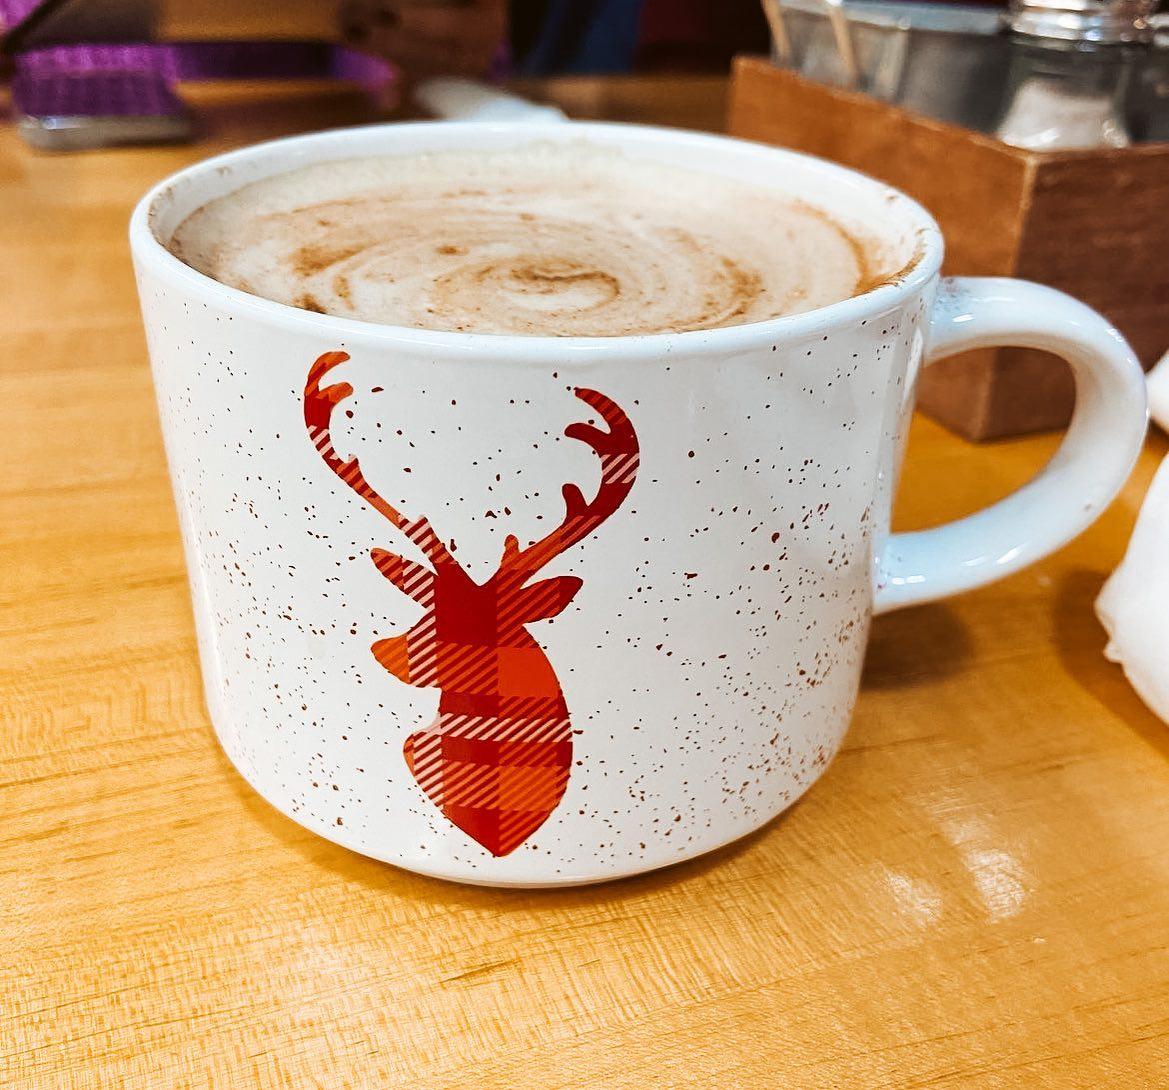 A cup of coffee at Mason Jar